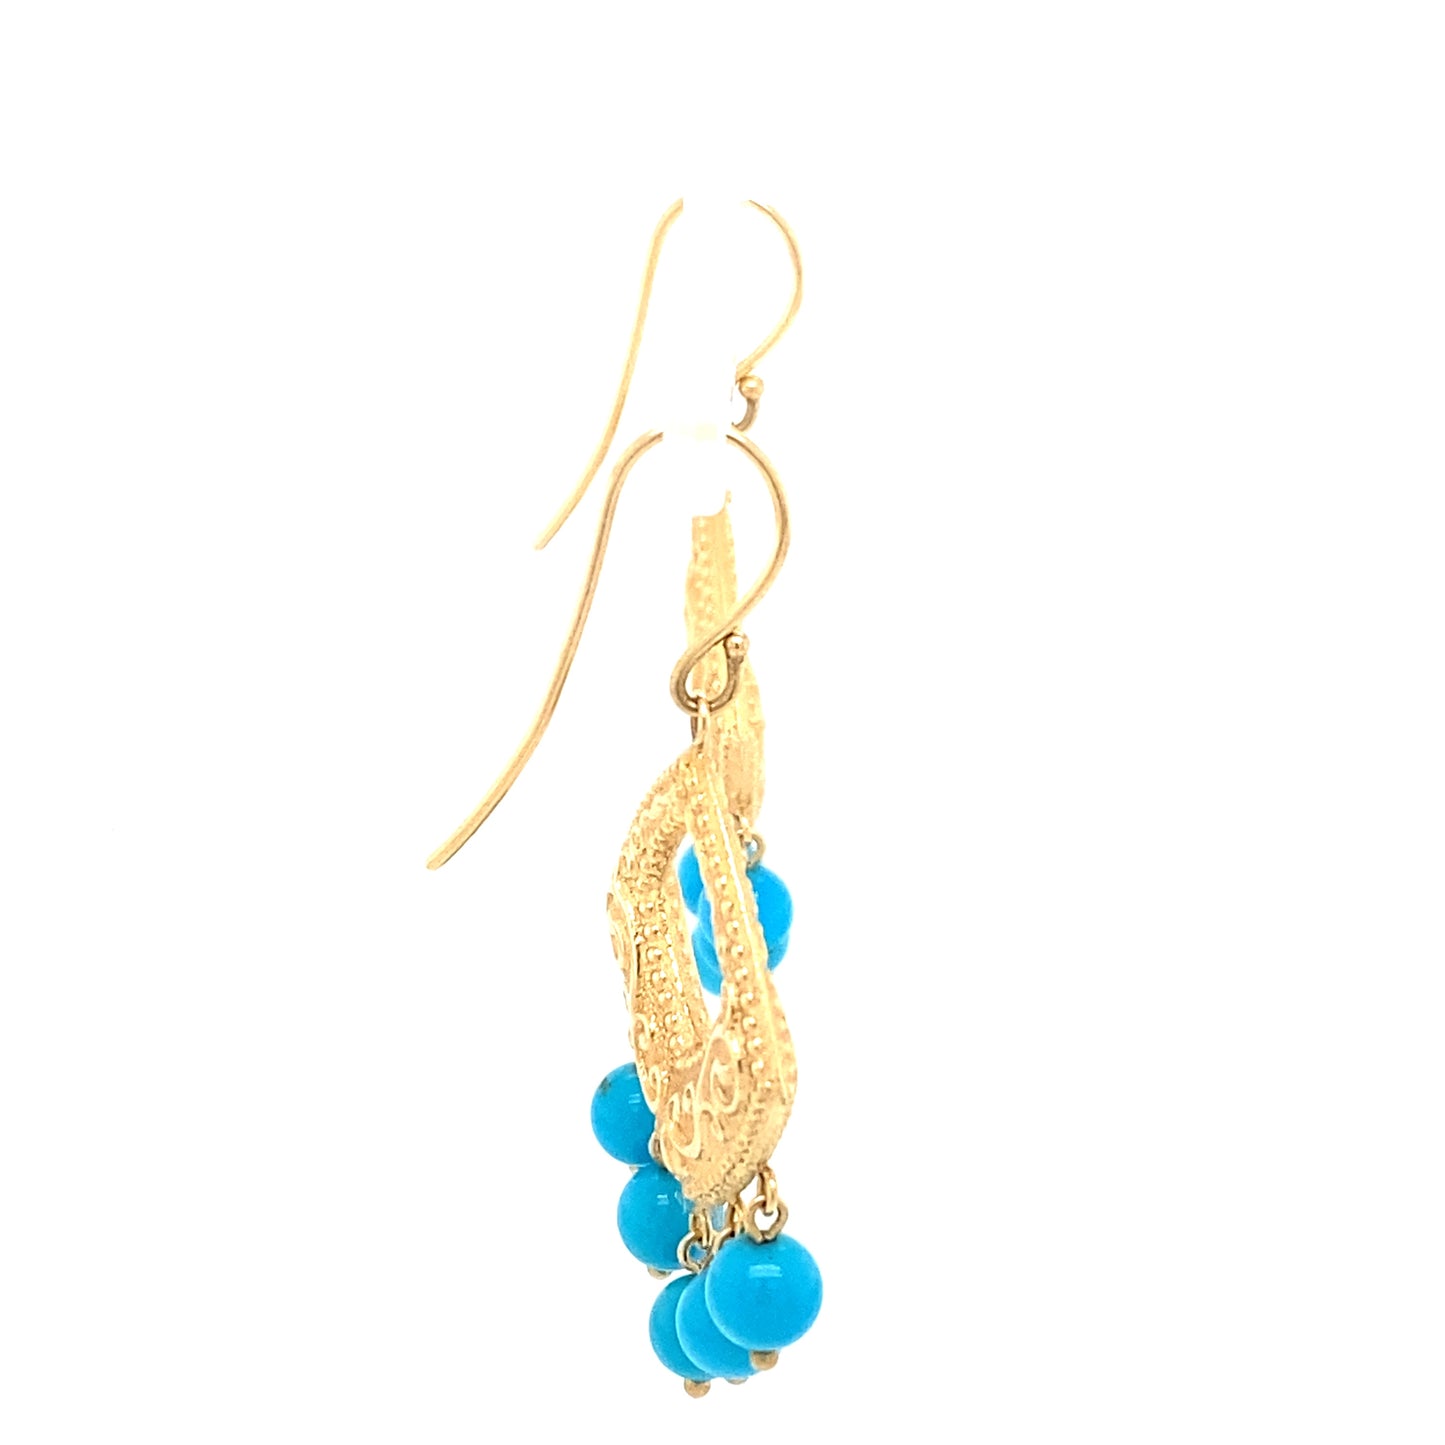 Circa 2000s Turquoise Bead Chandelier Earrings in 14K Gold